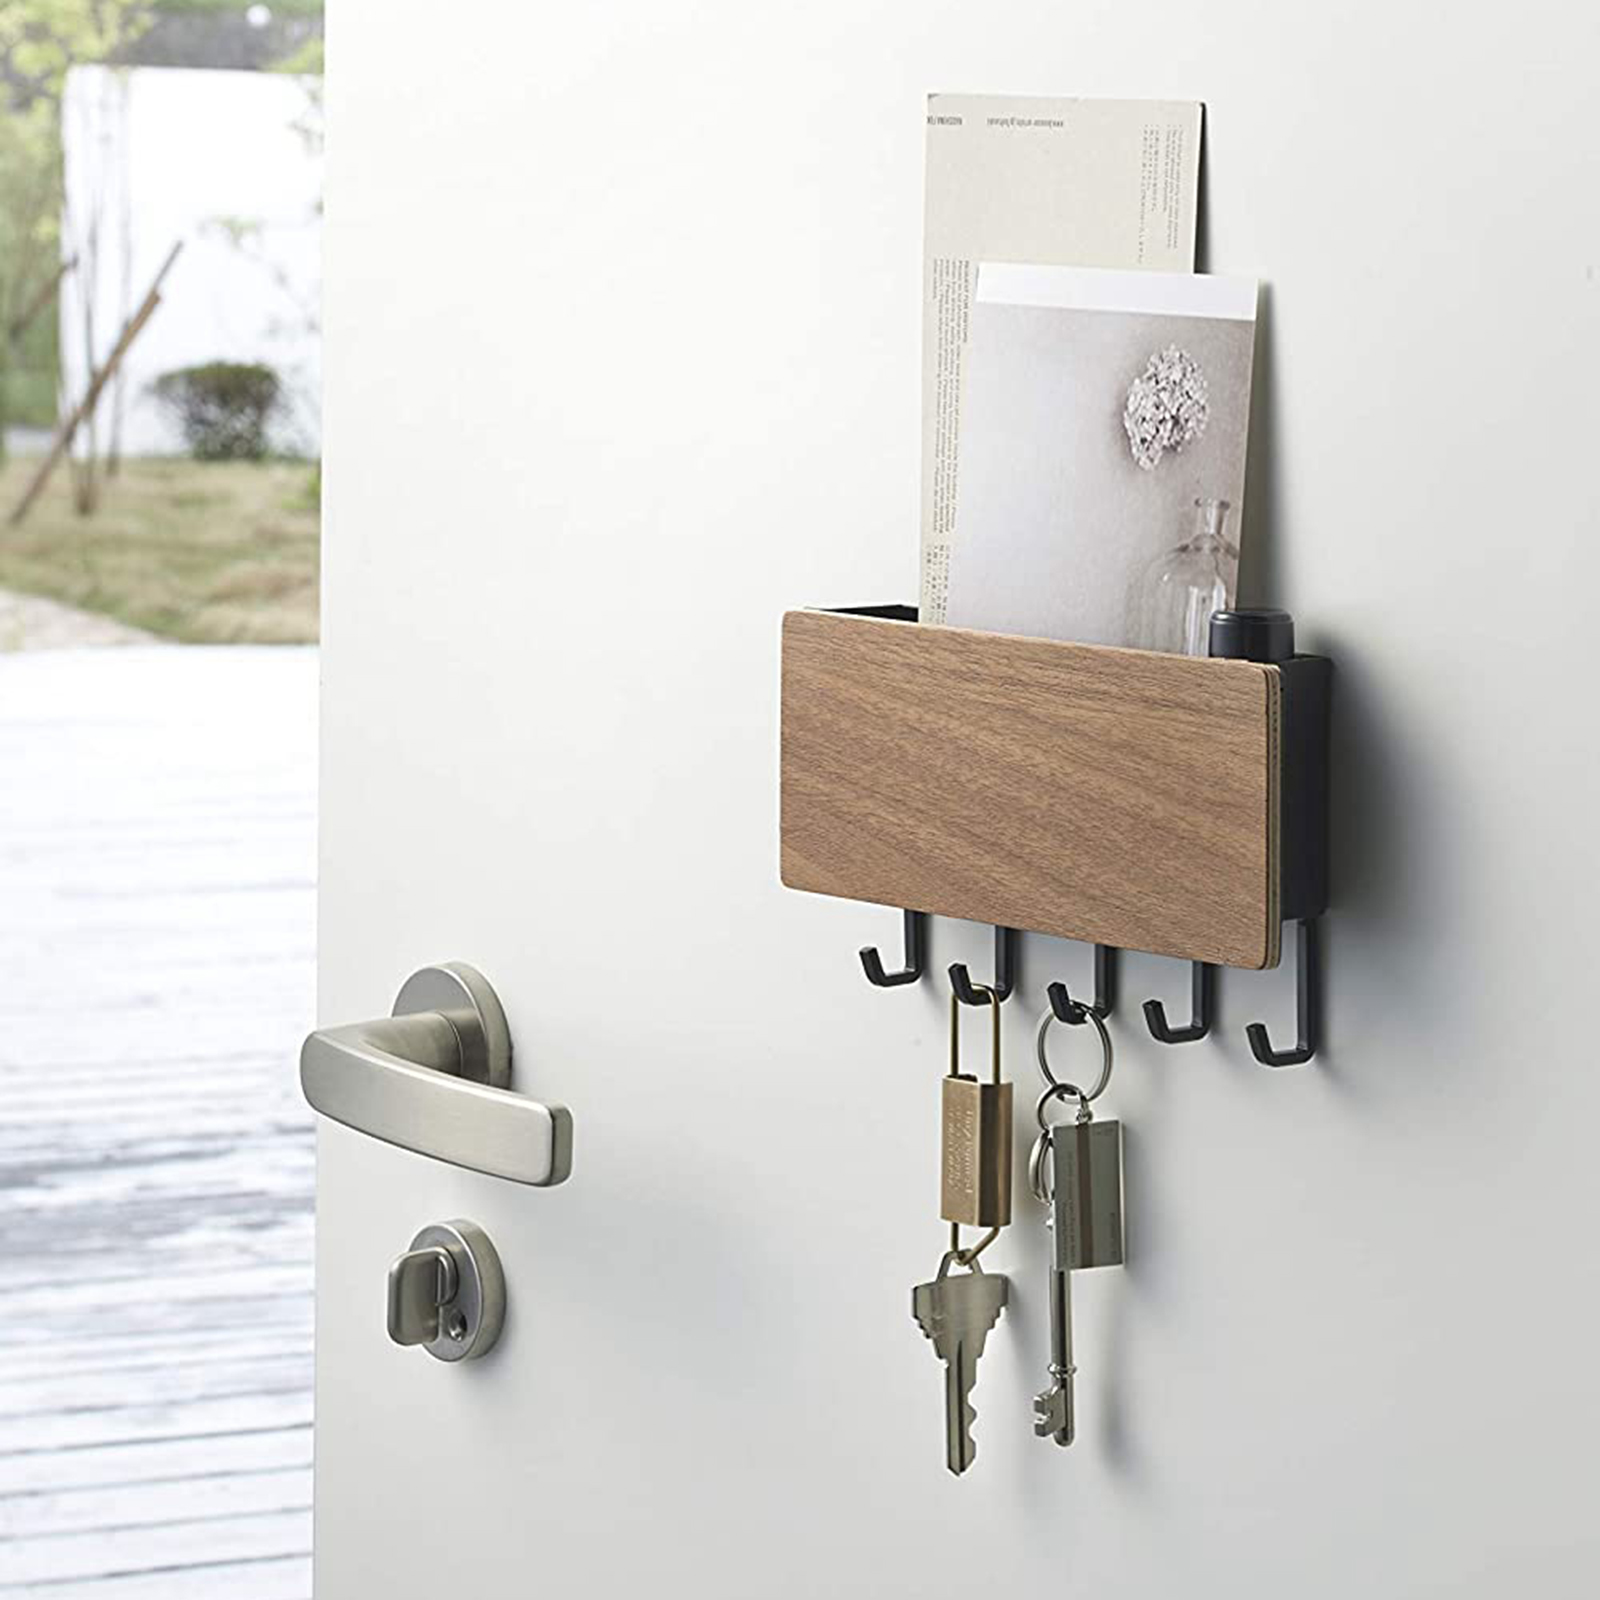 kesoto Creative Wall Mounted Adhesive Shelf Hooks Storage Rack Key Holder Beige